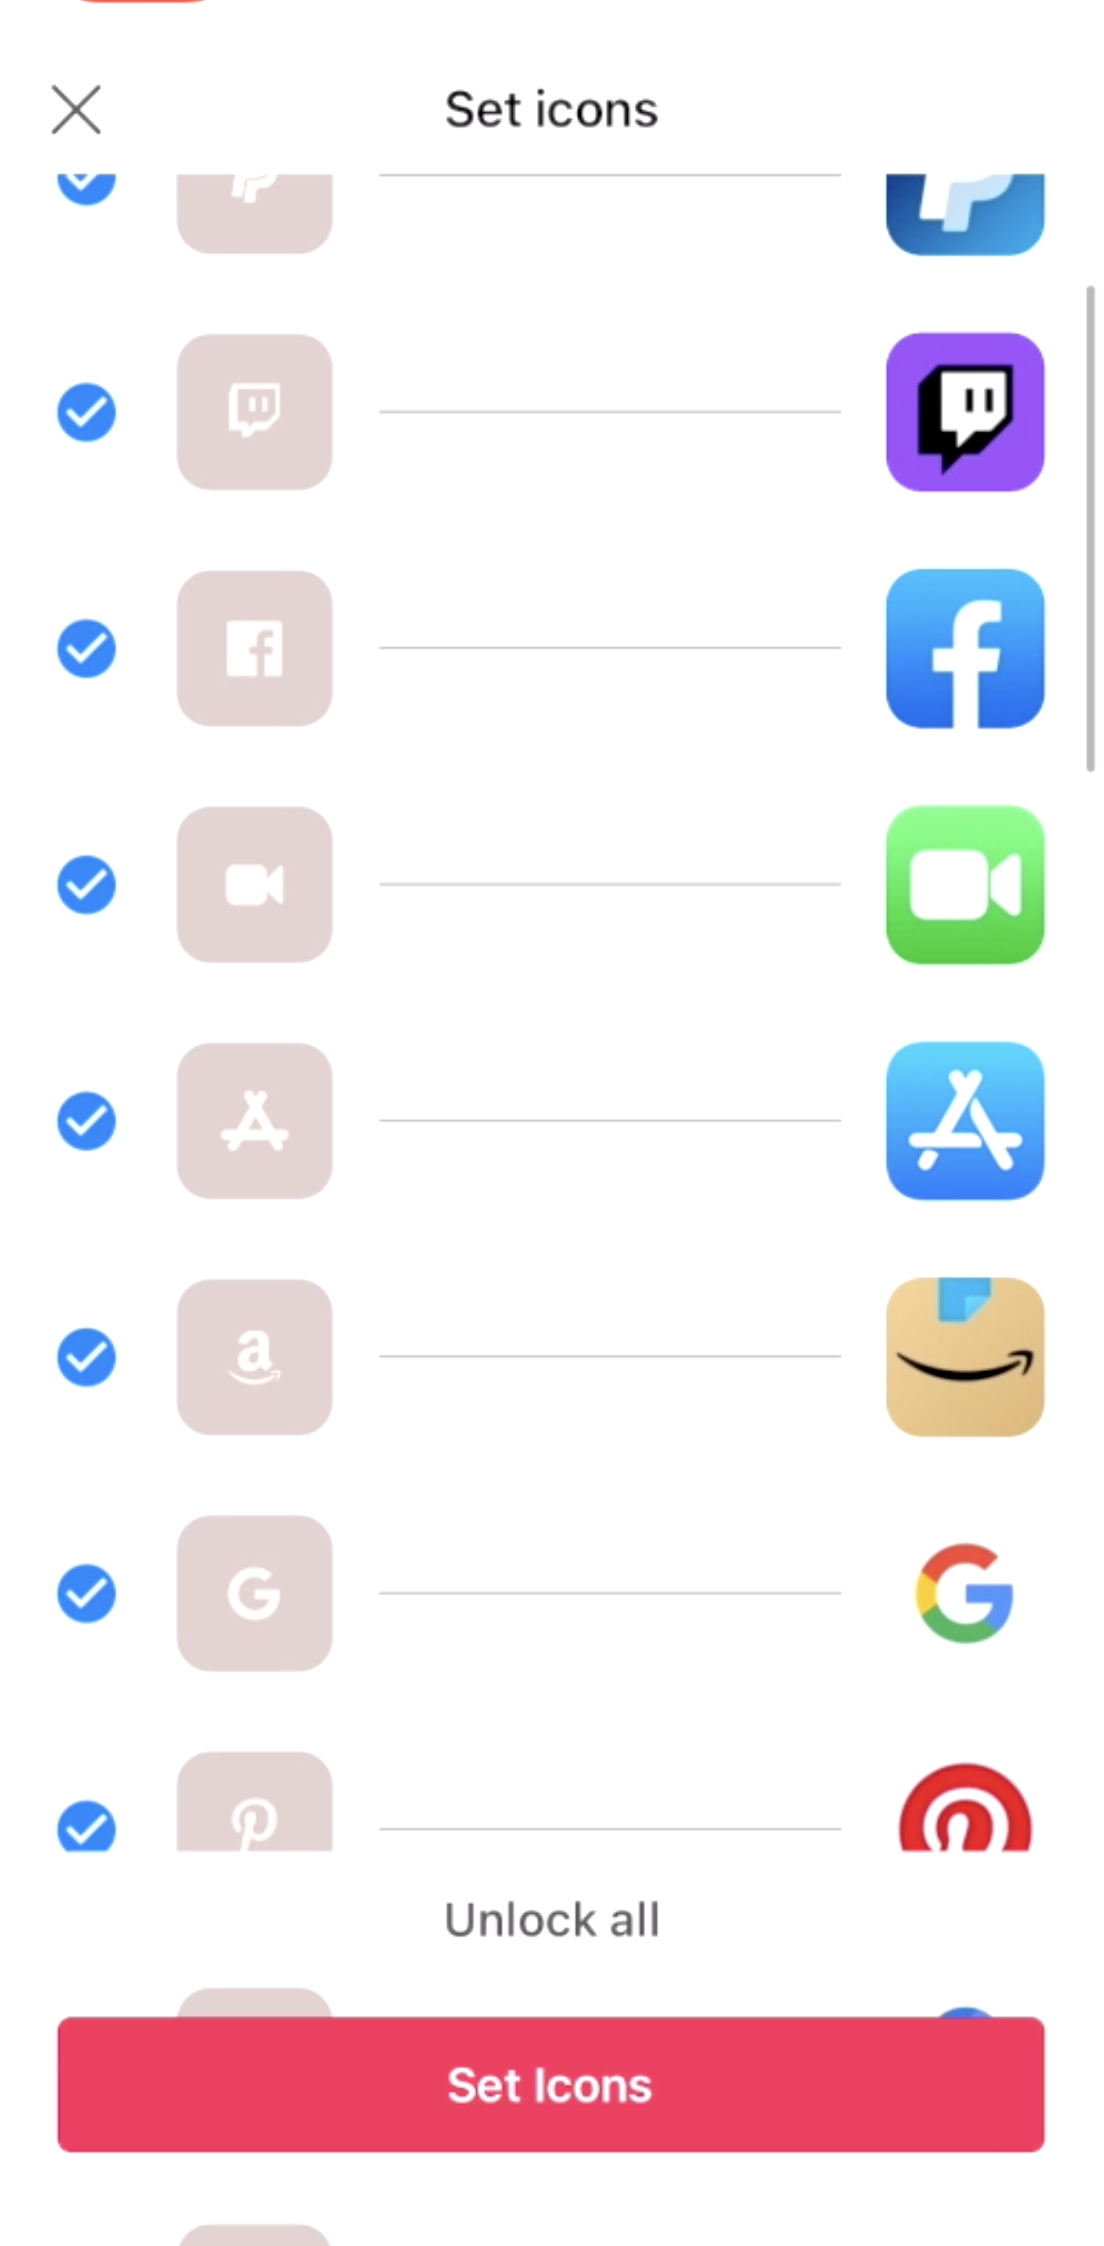 #2 image of [iOS]How to change the app icons via WidgetClub theme?